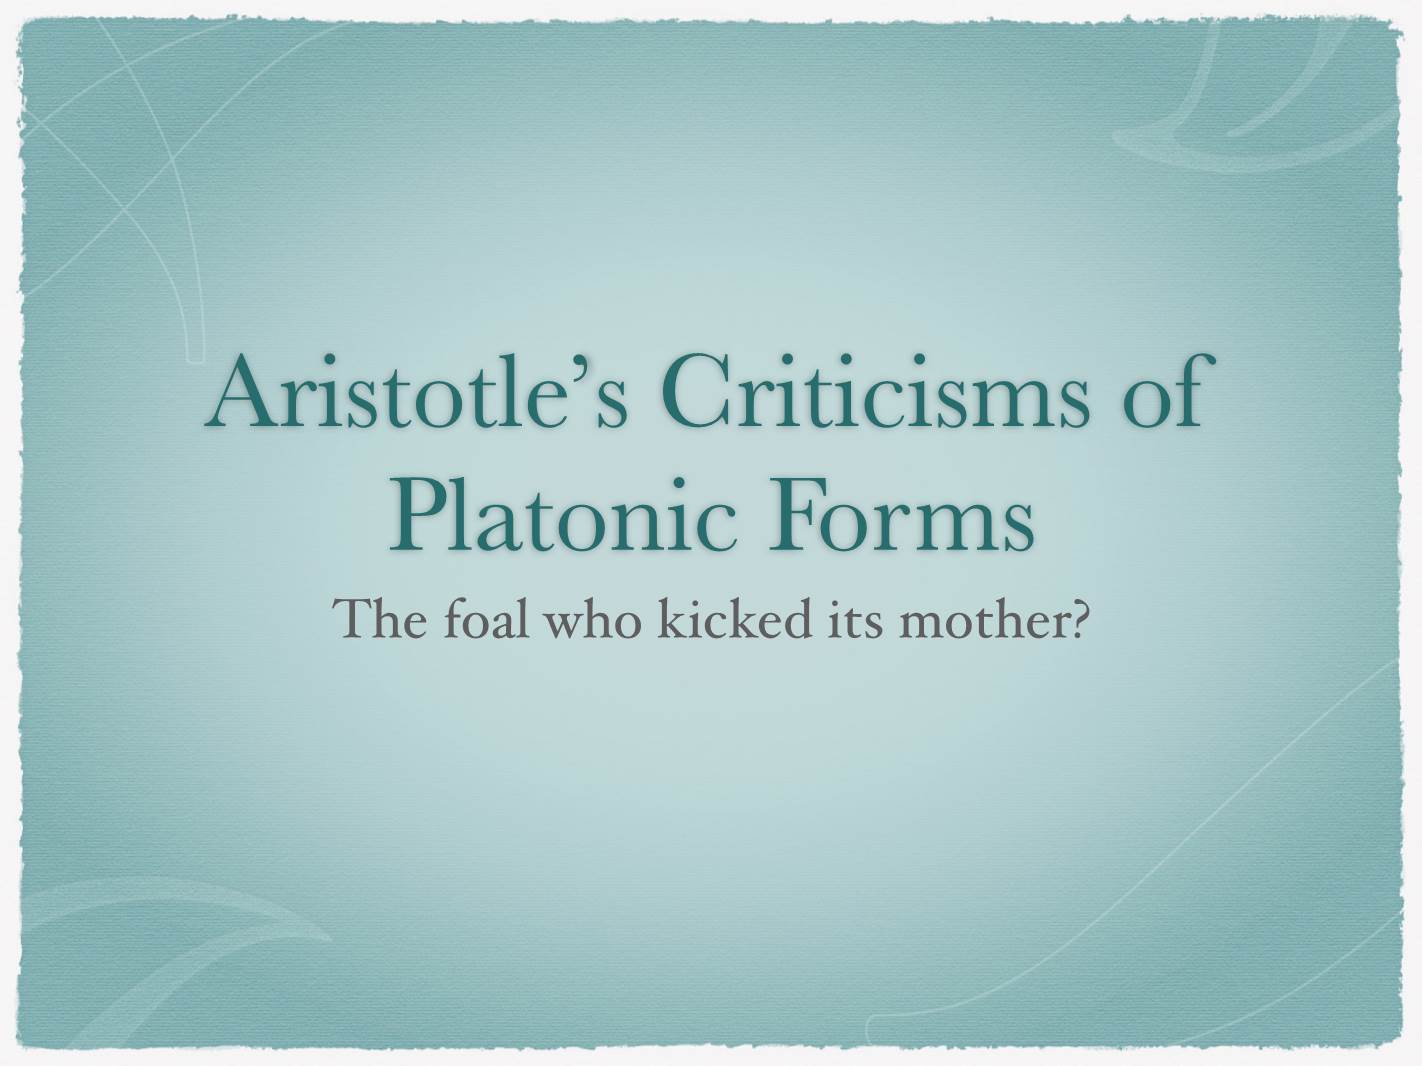 5. Aristotle's Criticisms of Platonic Forms